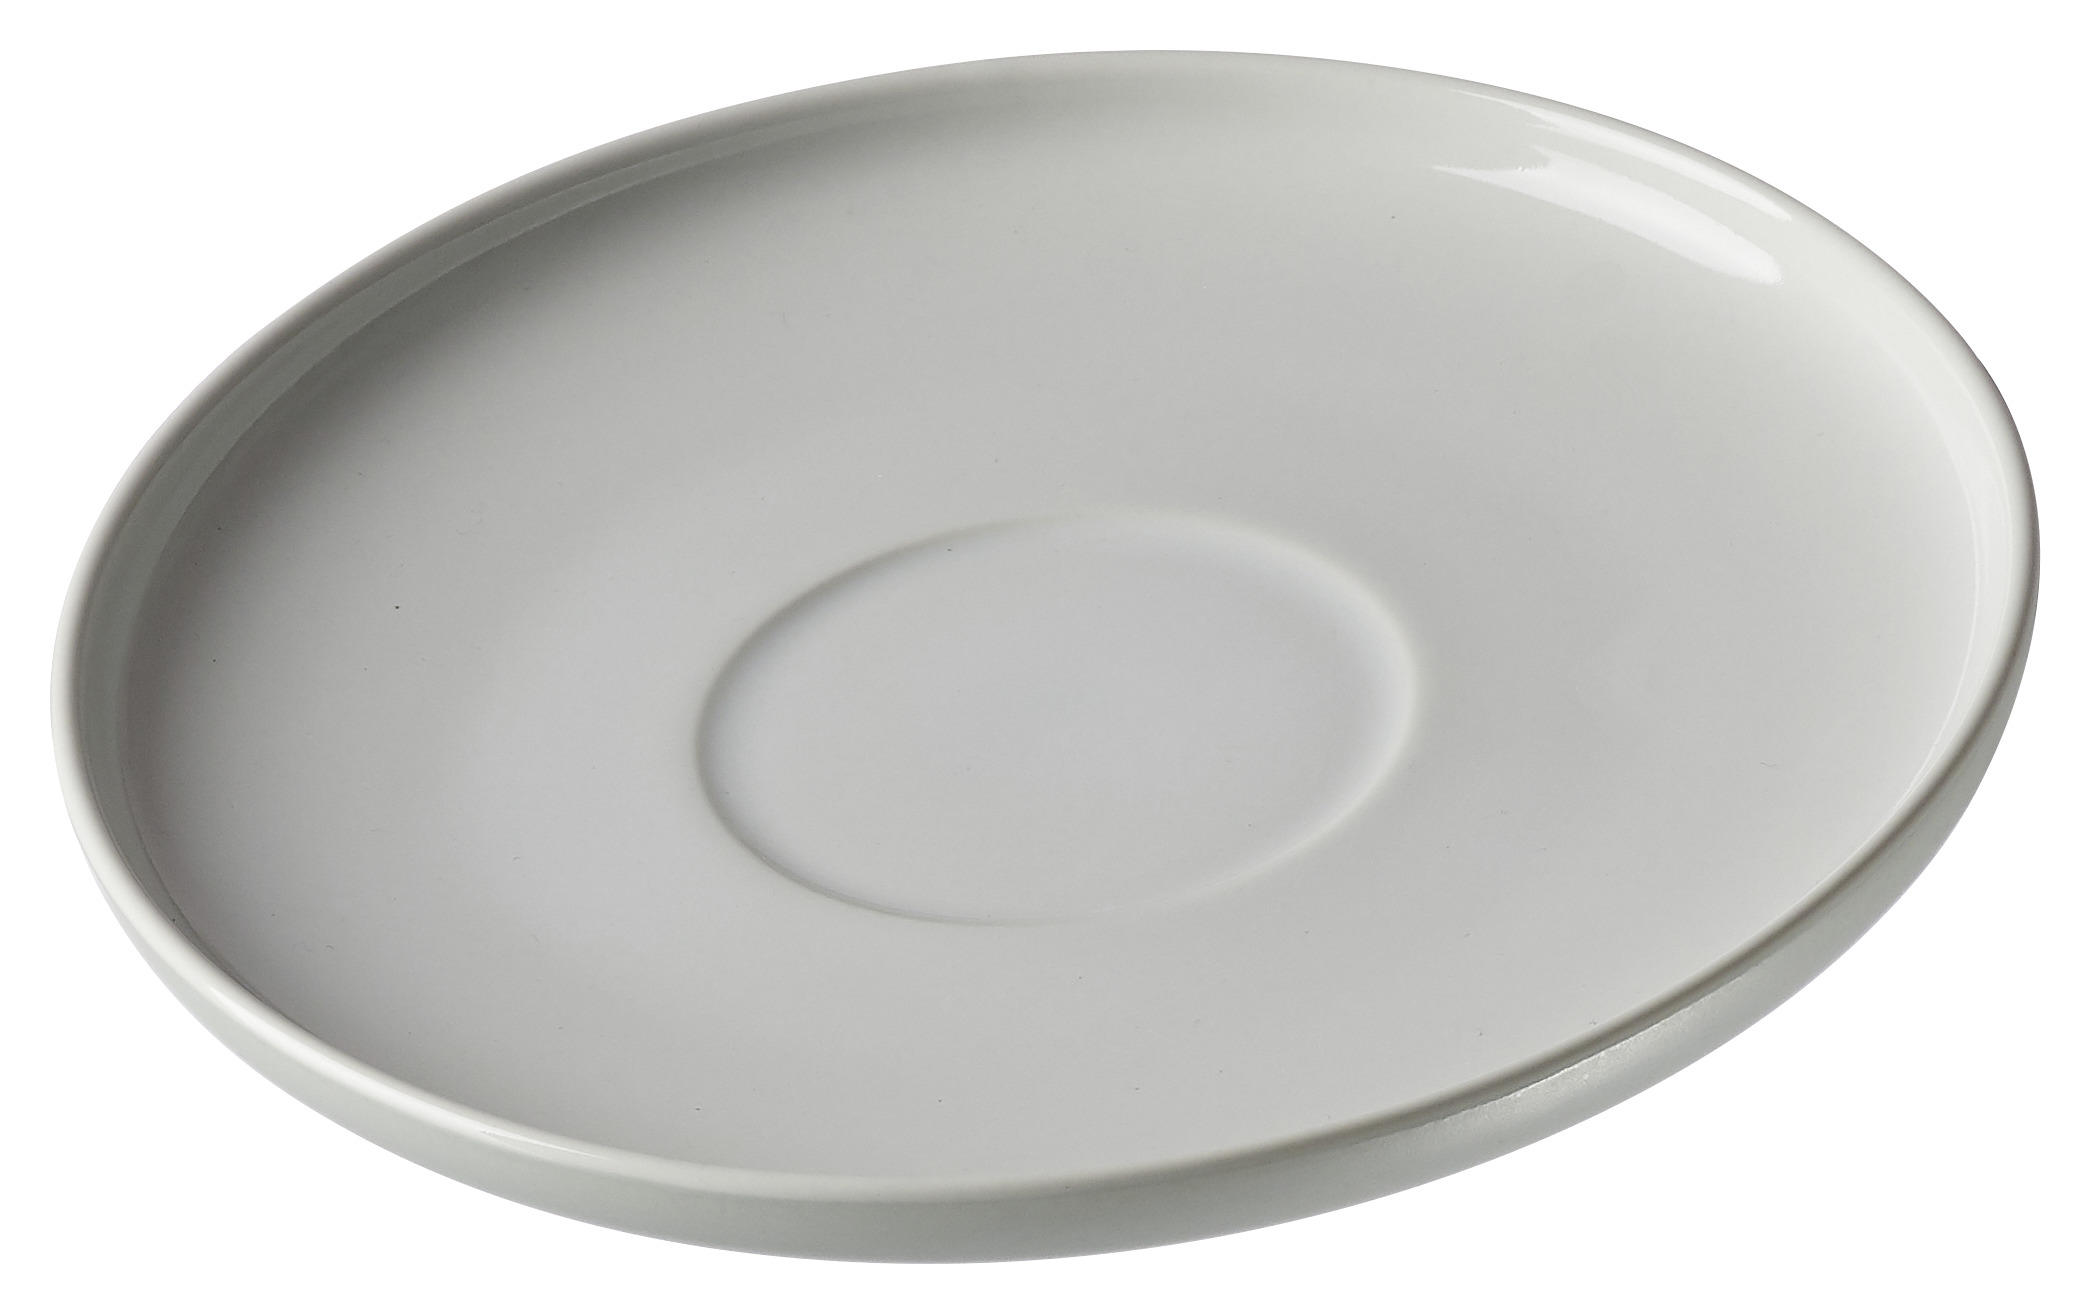 UNTERTASSE - Weiß/Mintgrün, Design, Keramik (15cm) - Ritzenhoff Breker